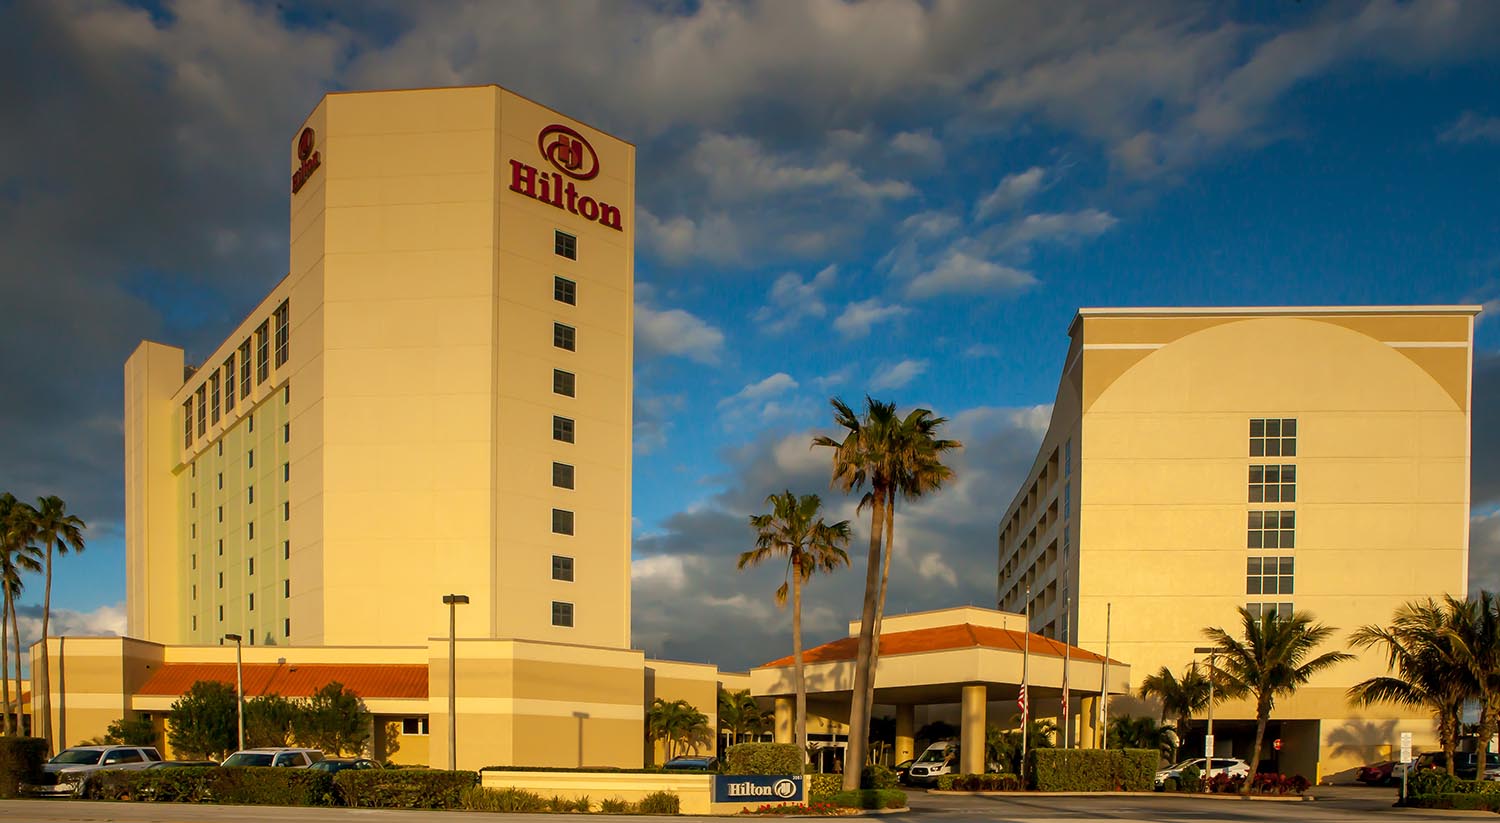 Hilton Hotel in Melbourne, Florida